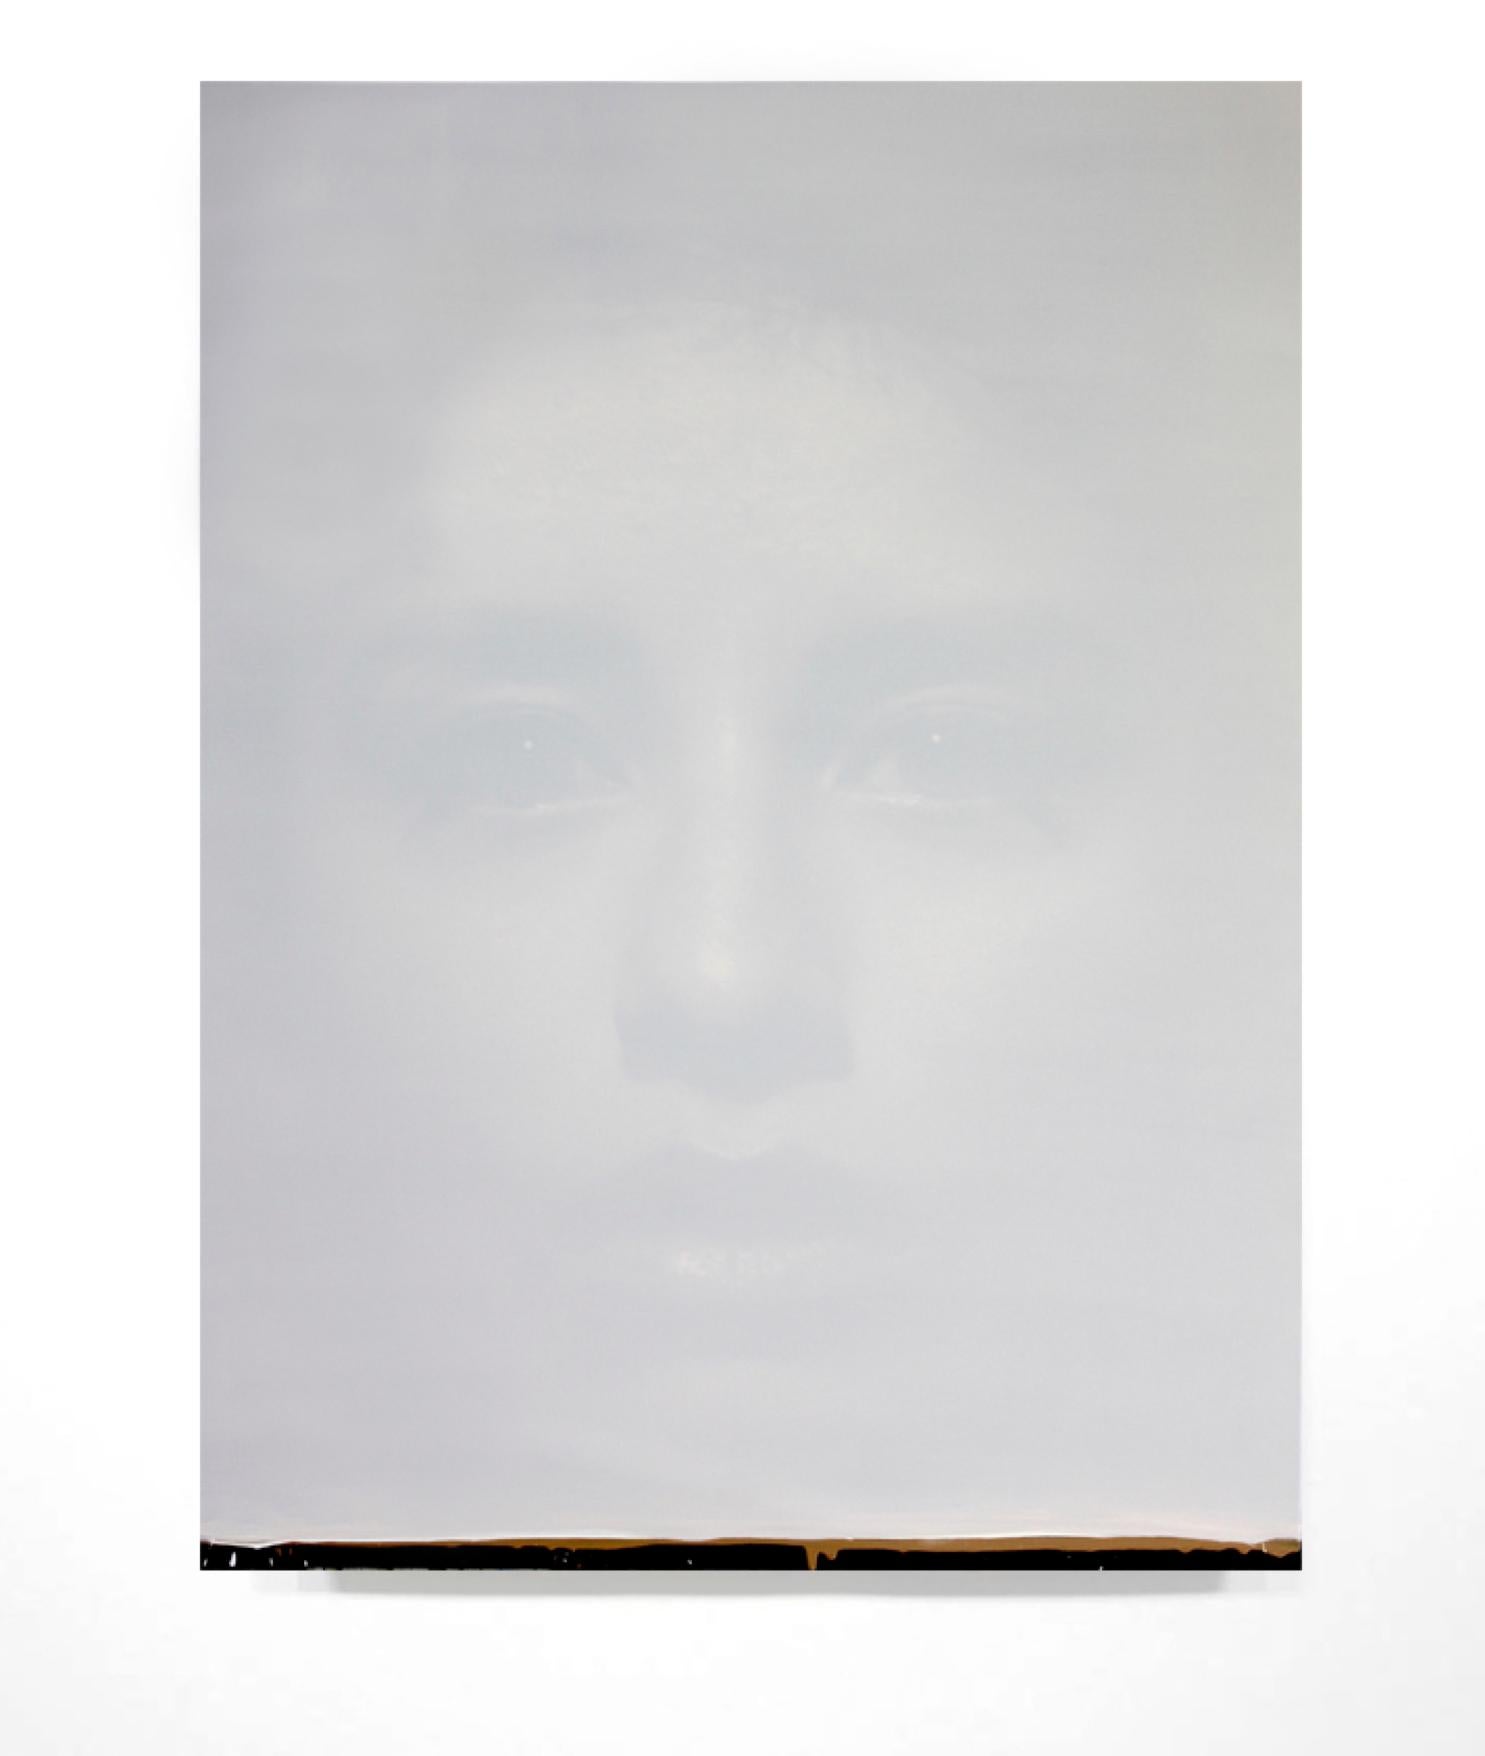 Roni Stretch Portrait Painting - Karina, orange chrome, dusty white